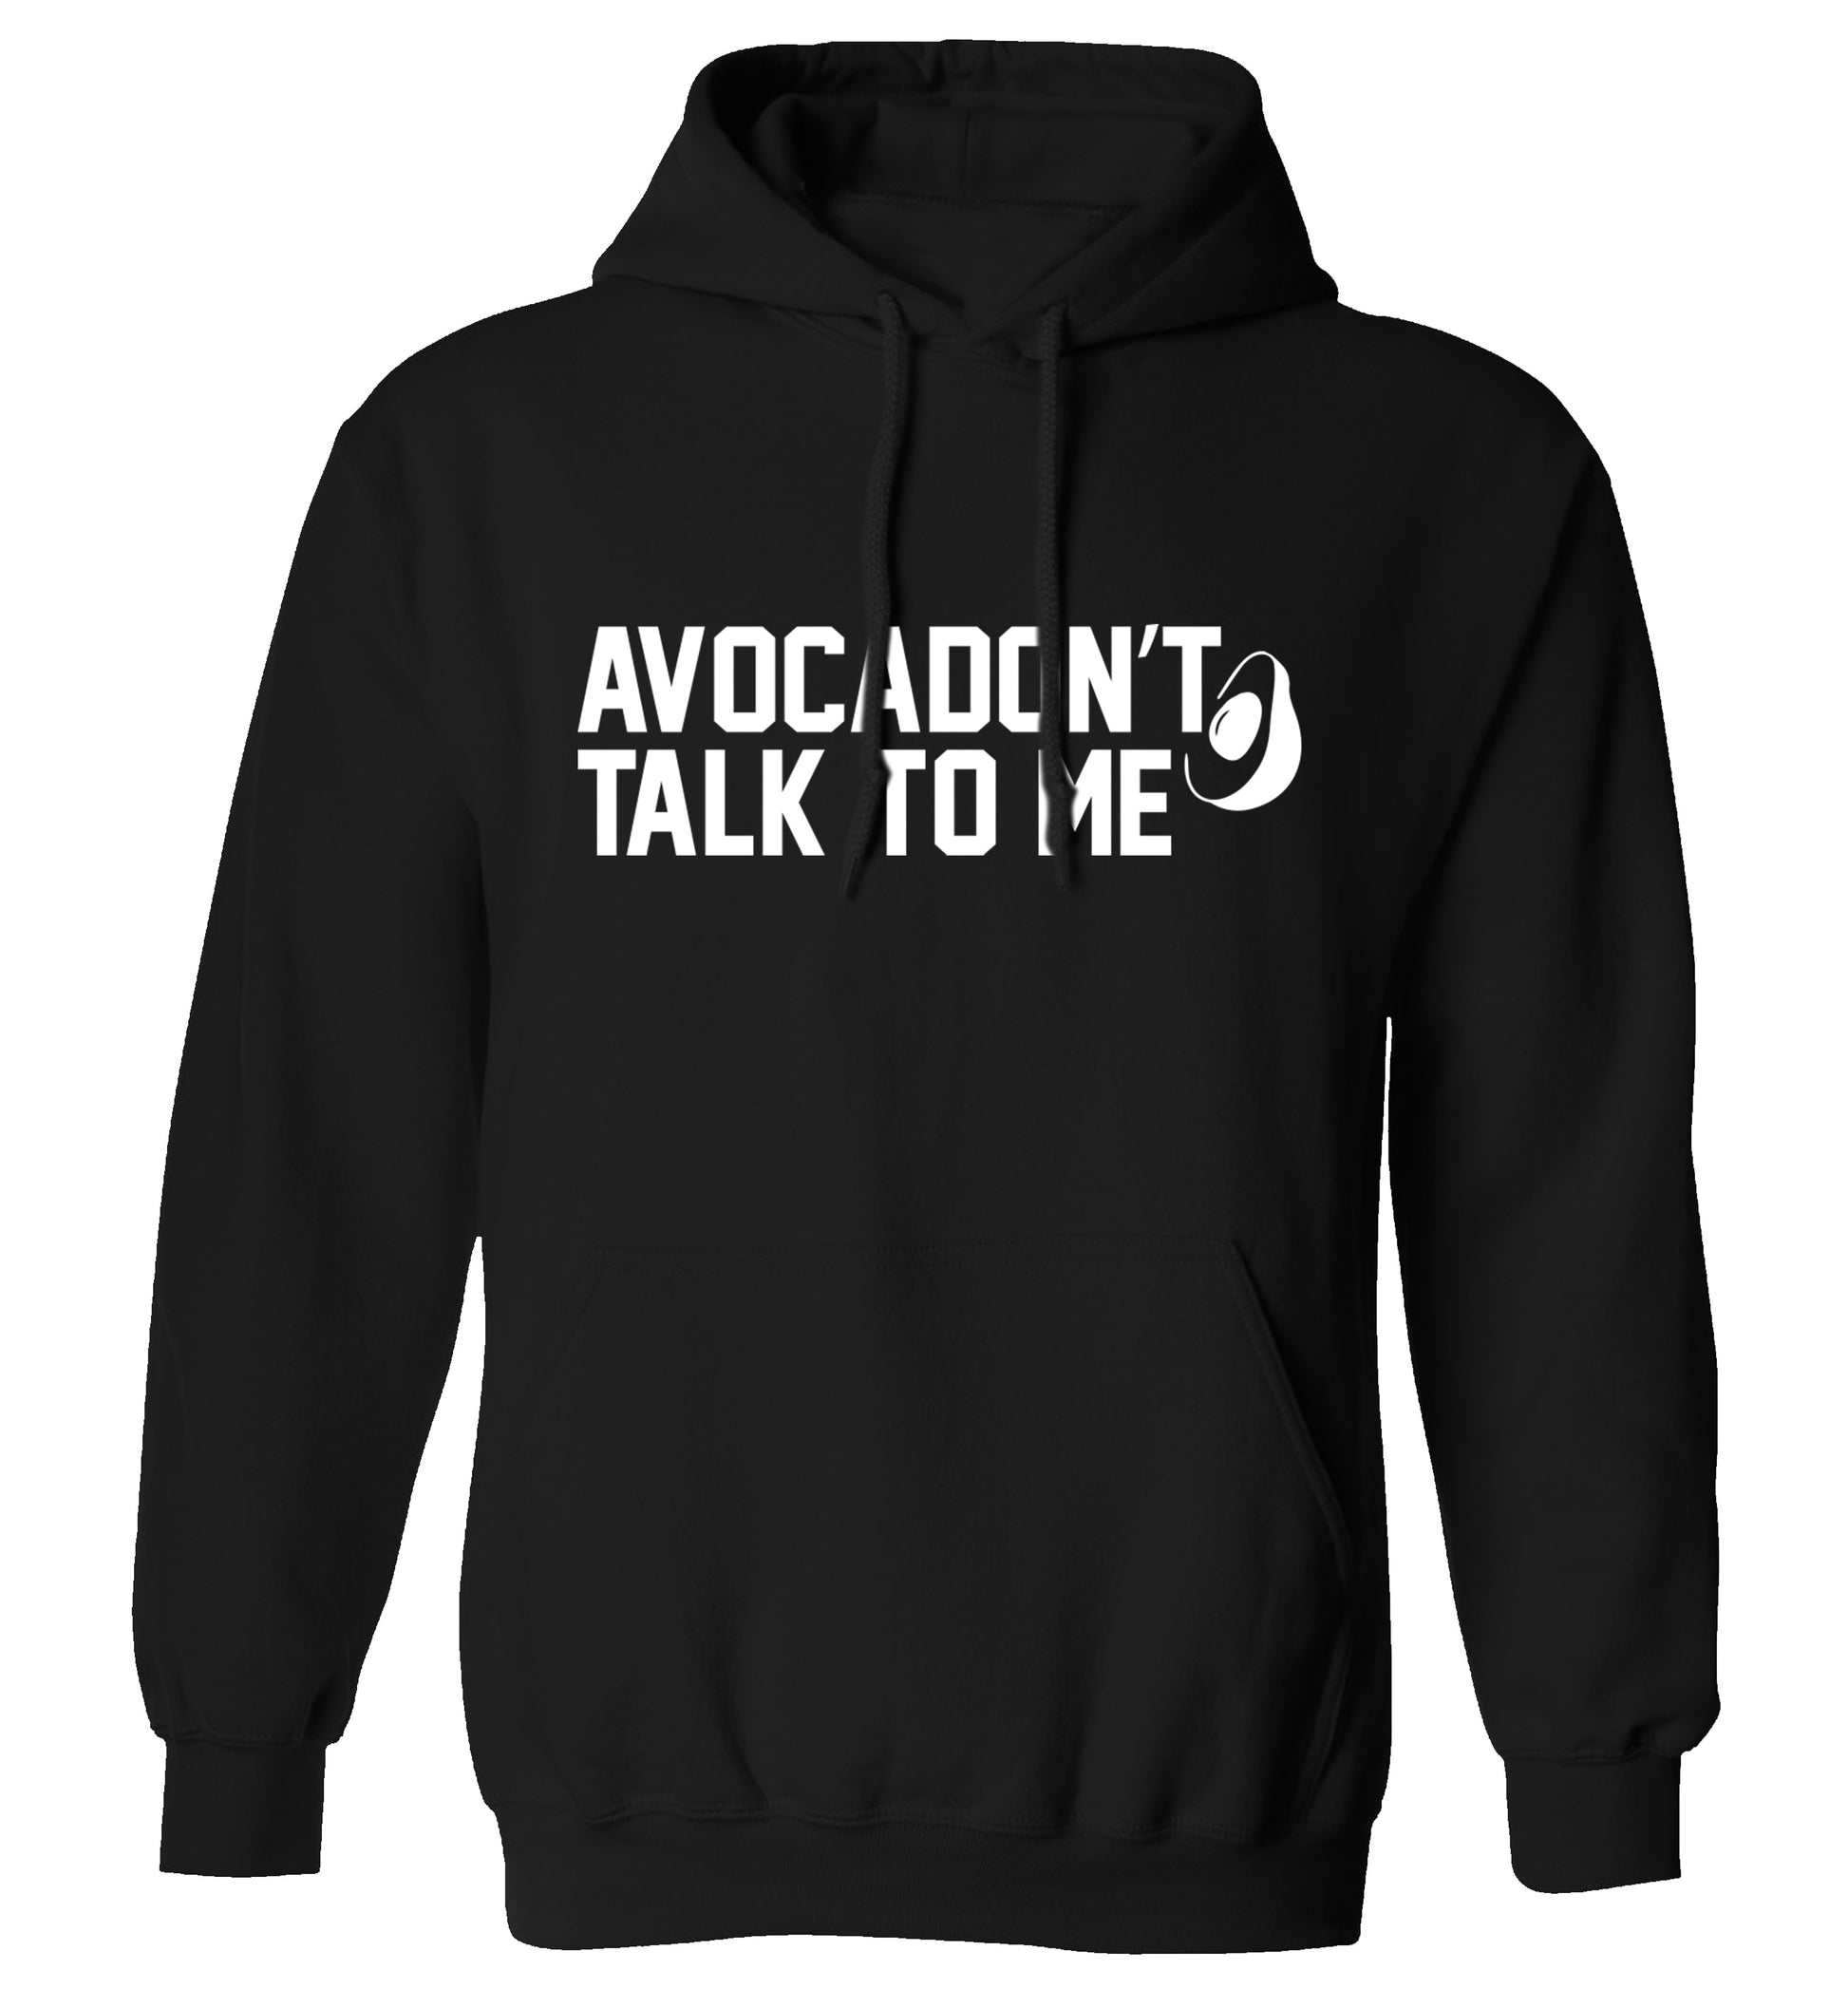 Avocadon't talk to me adults unisex black hoodie 2XL